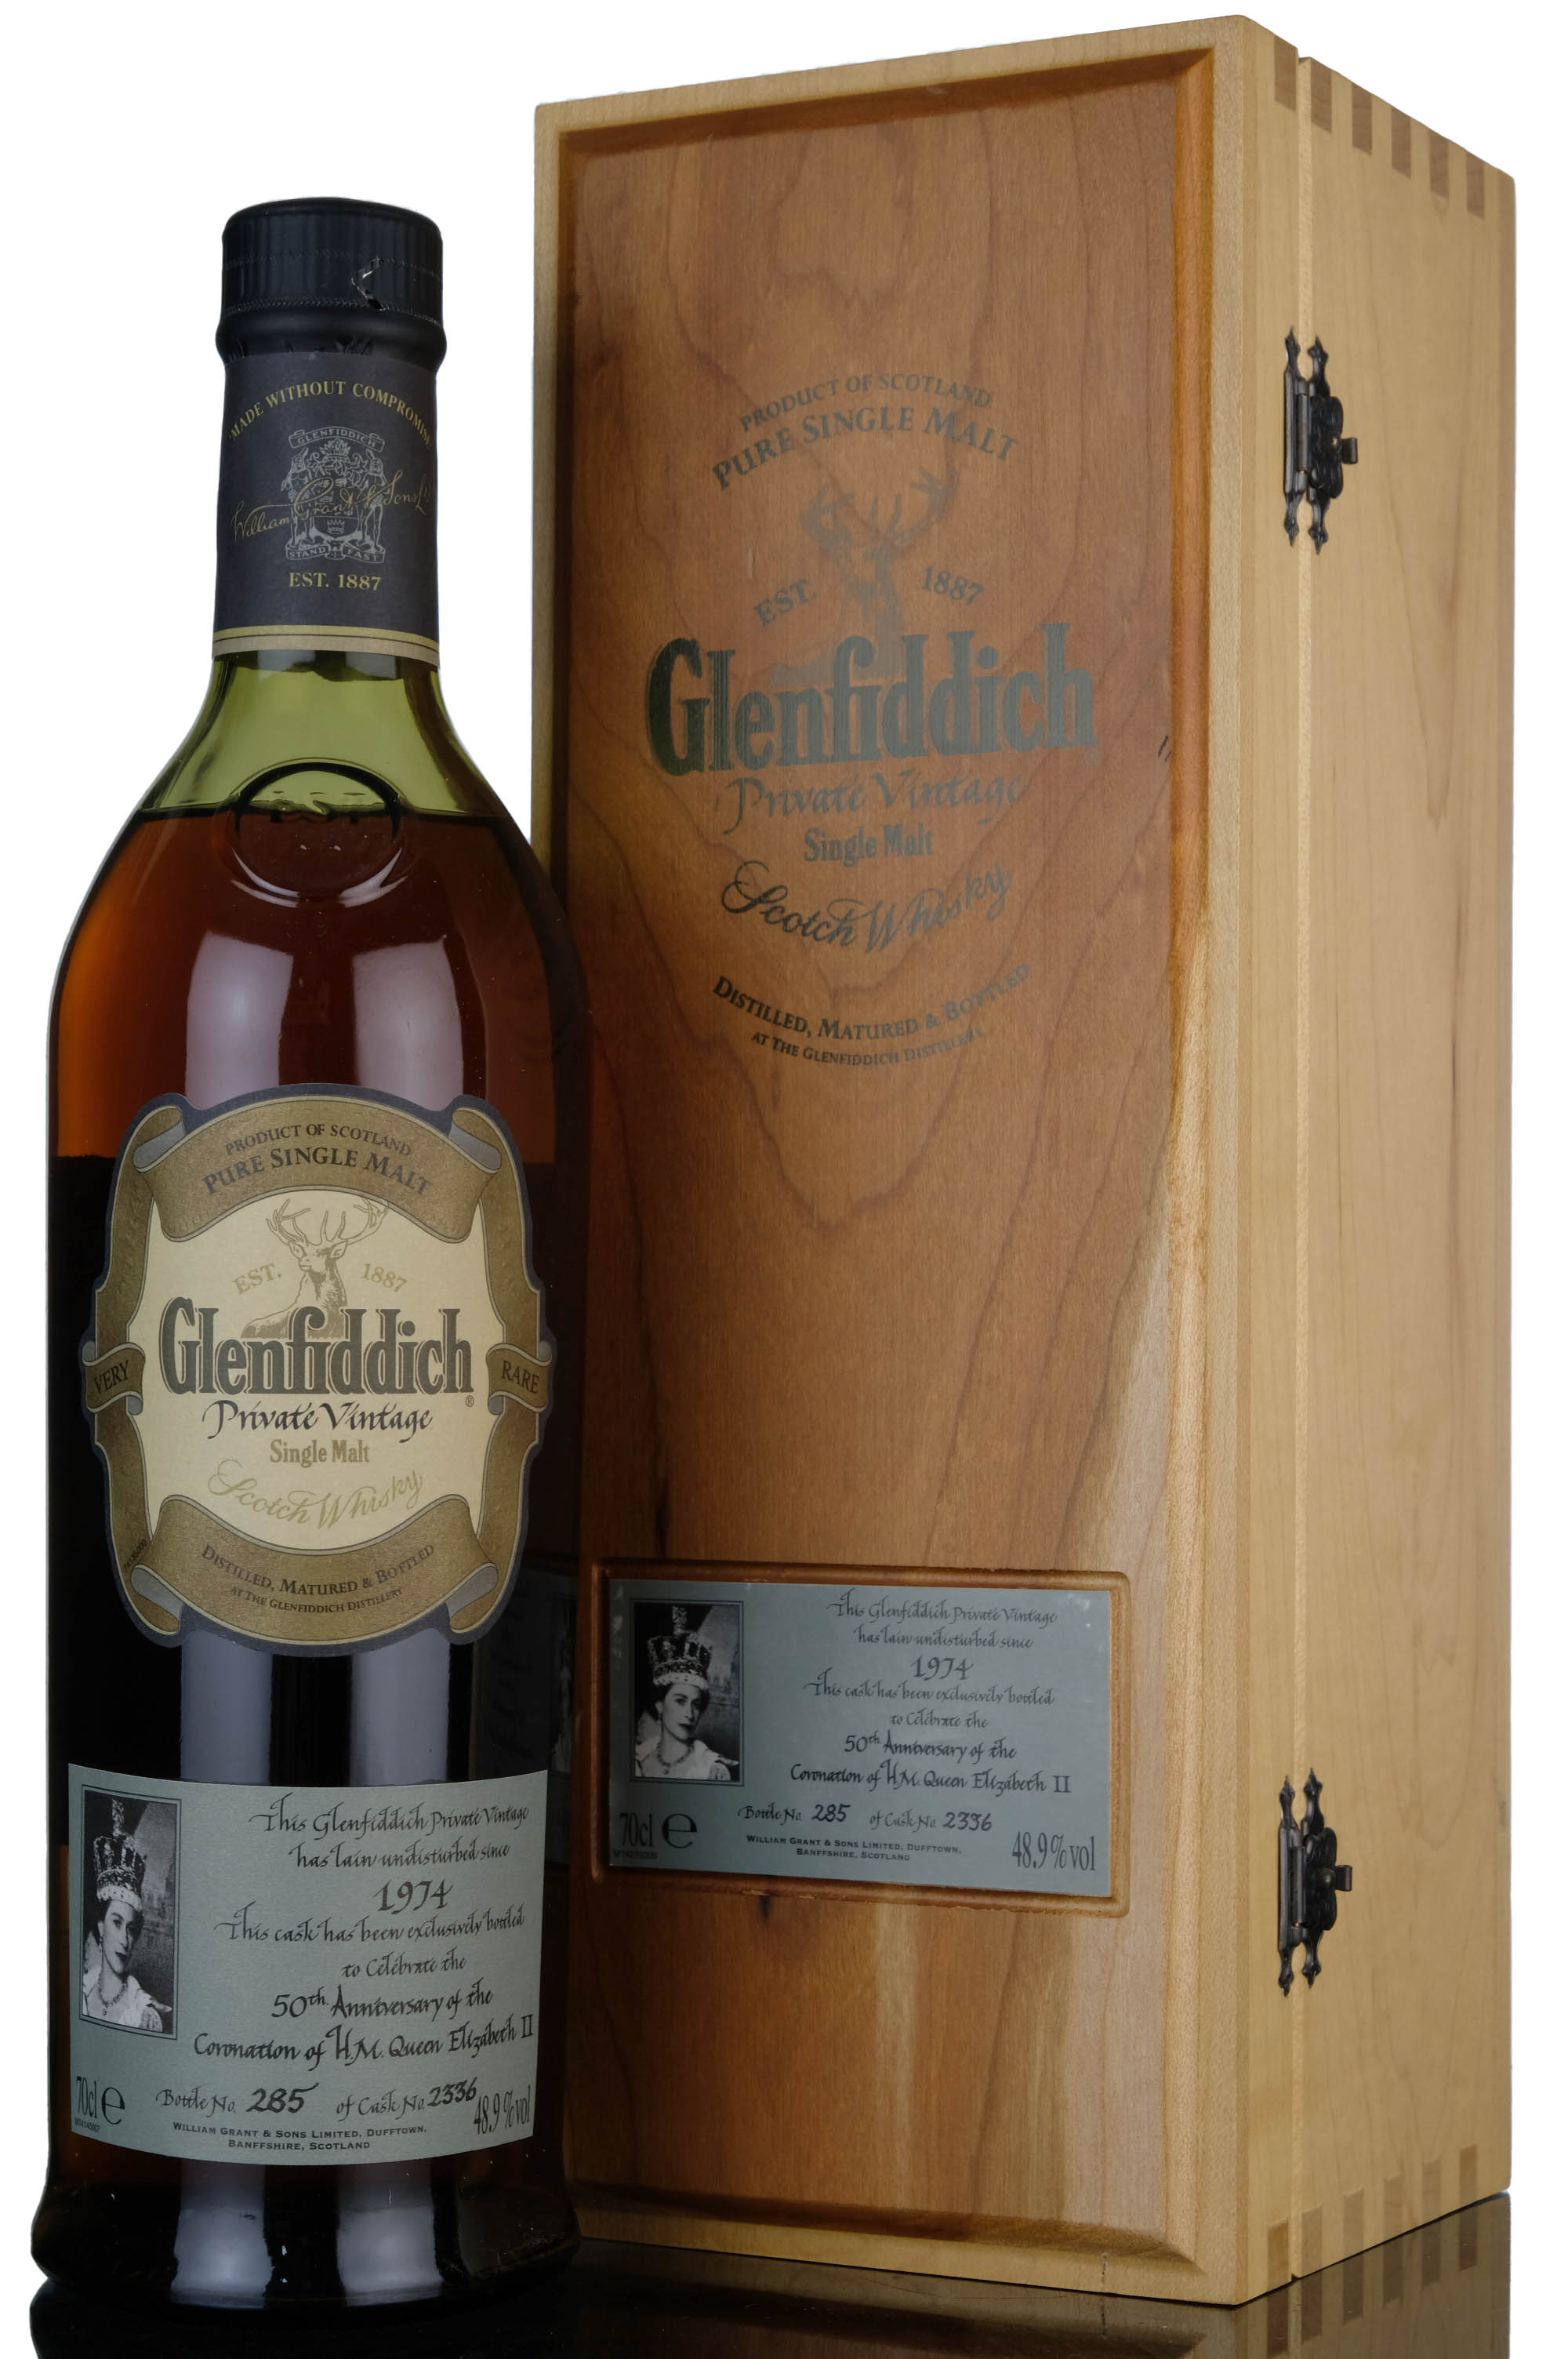 Glenfiddich 1974-2003 - Private Vintage - Single Cask 2336 - 50th Anniversary Queen Elizab